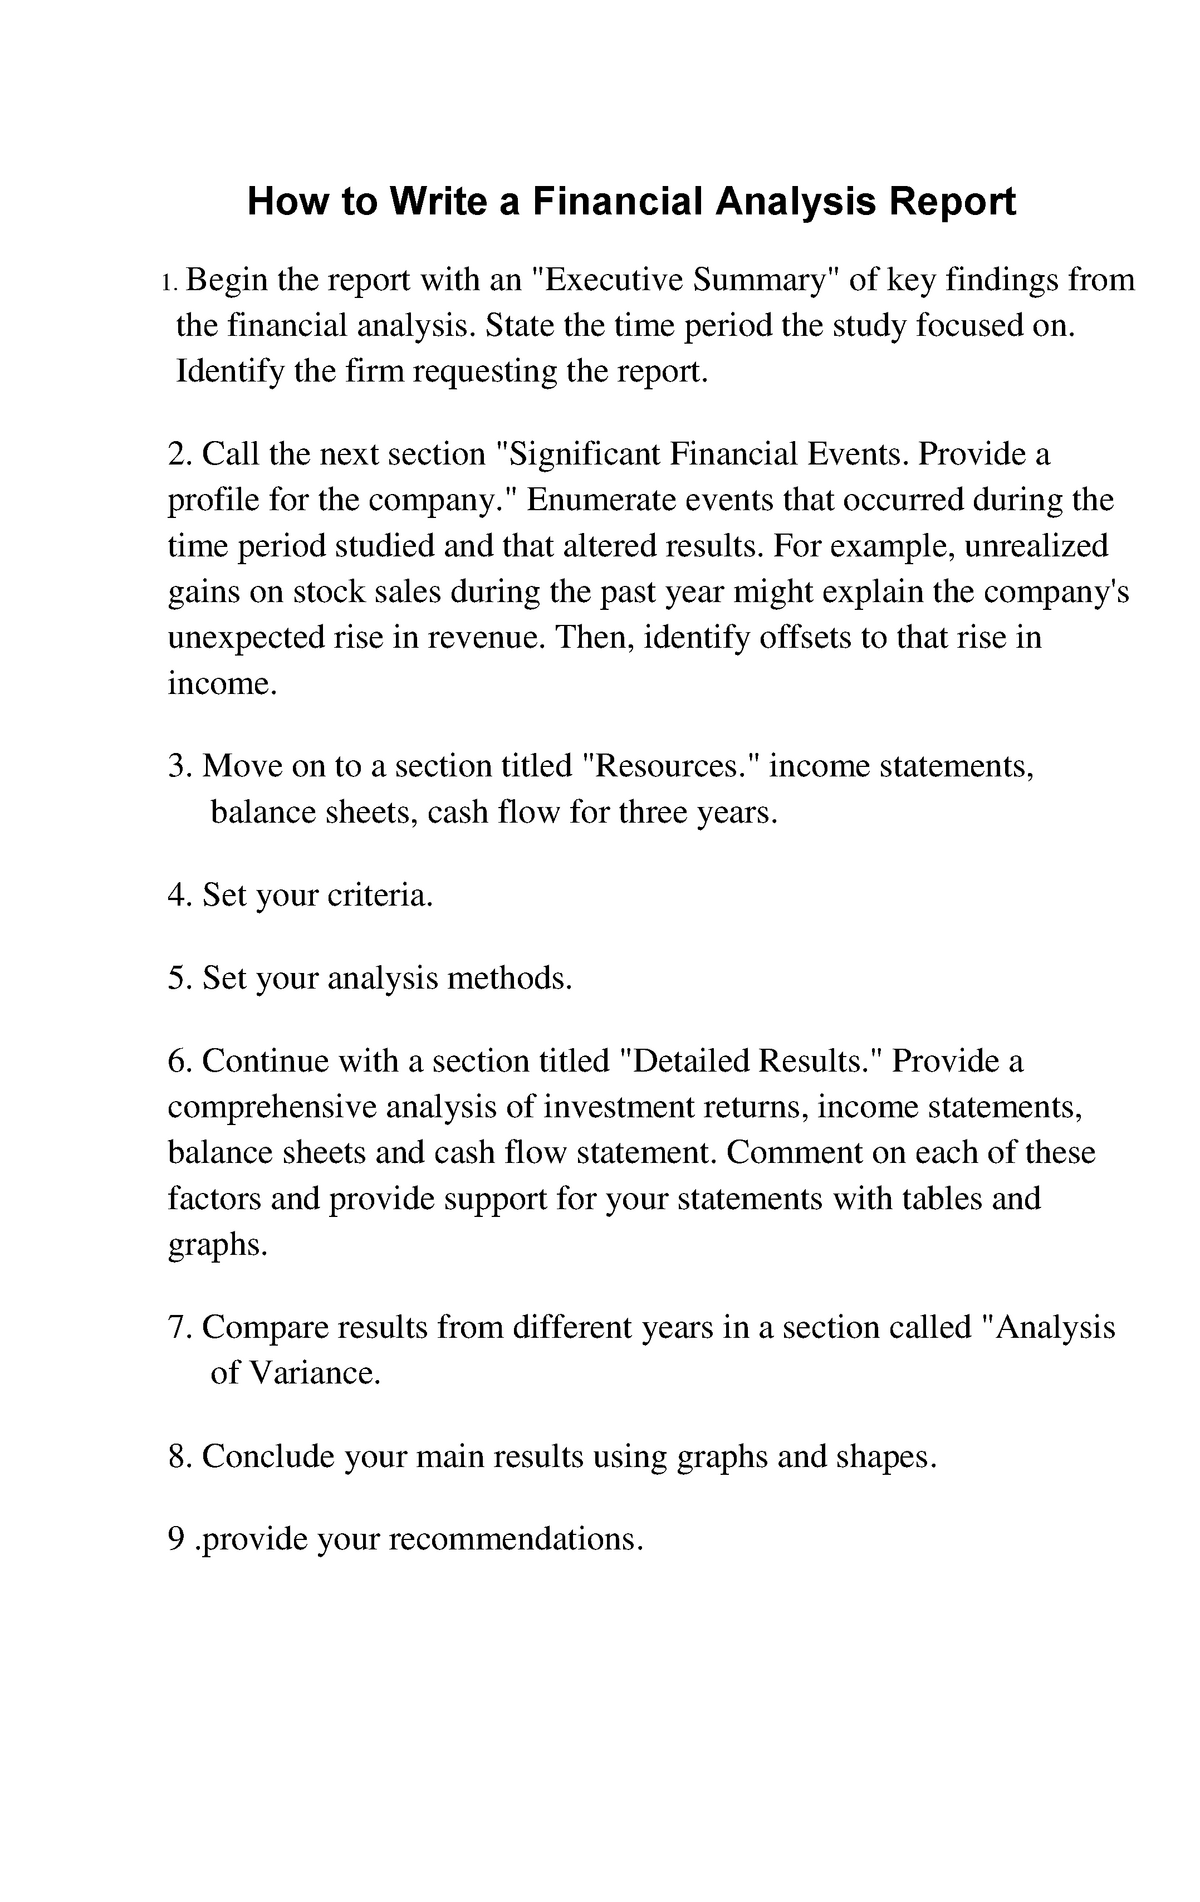 Finalist) Creating Financial Statements Using Microsoft Dynamics